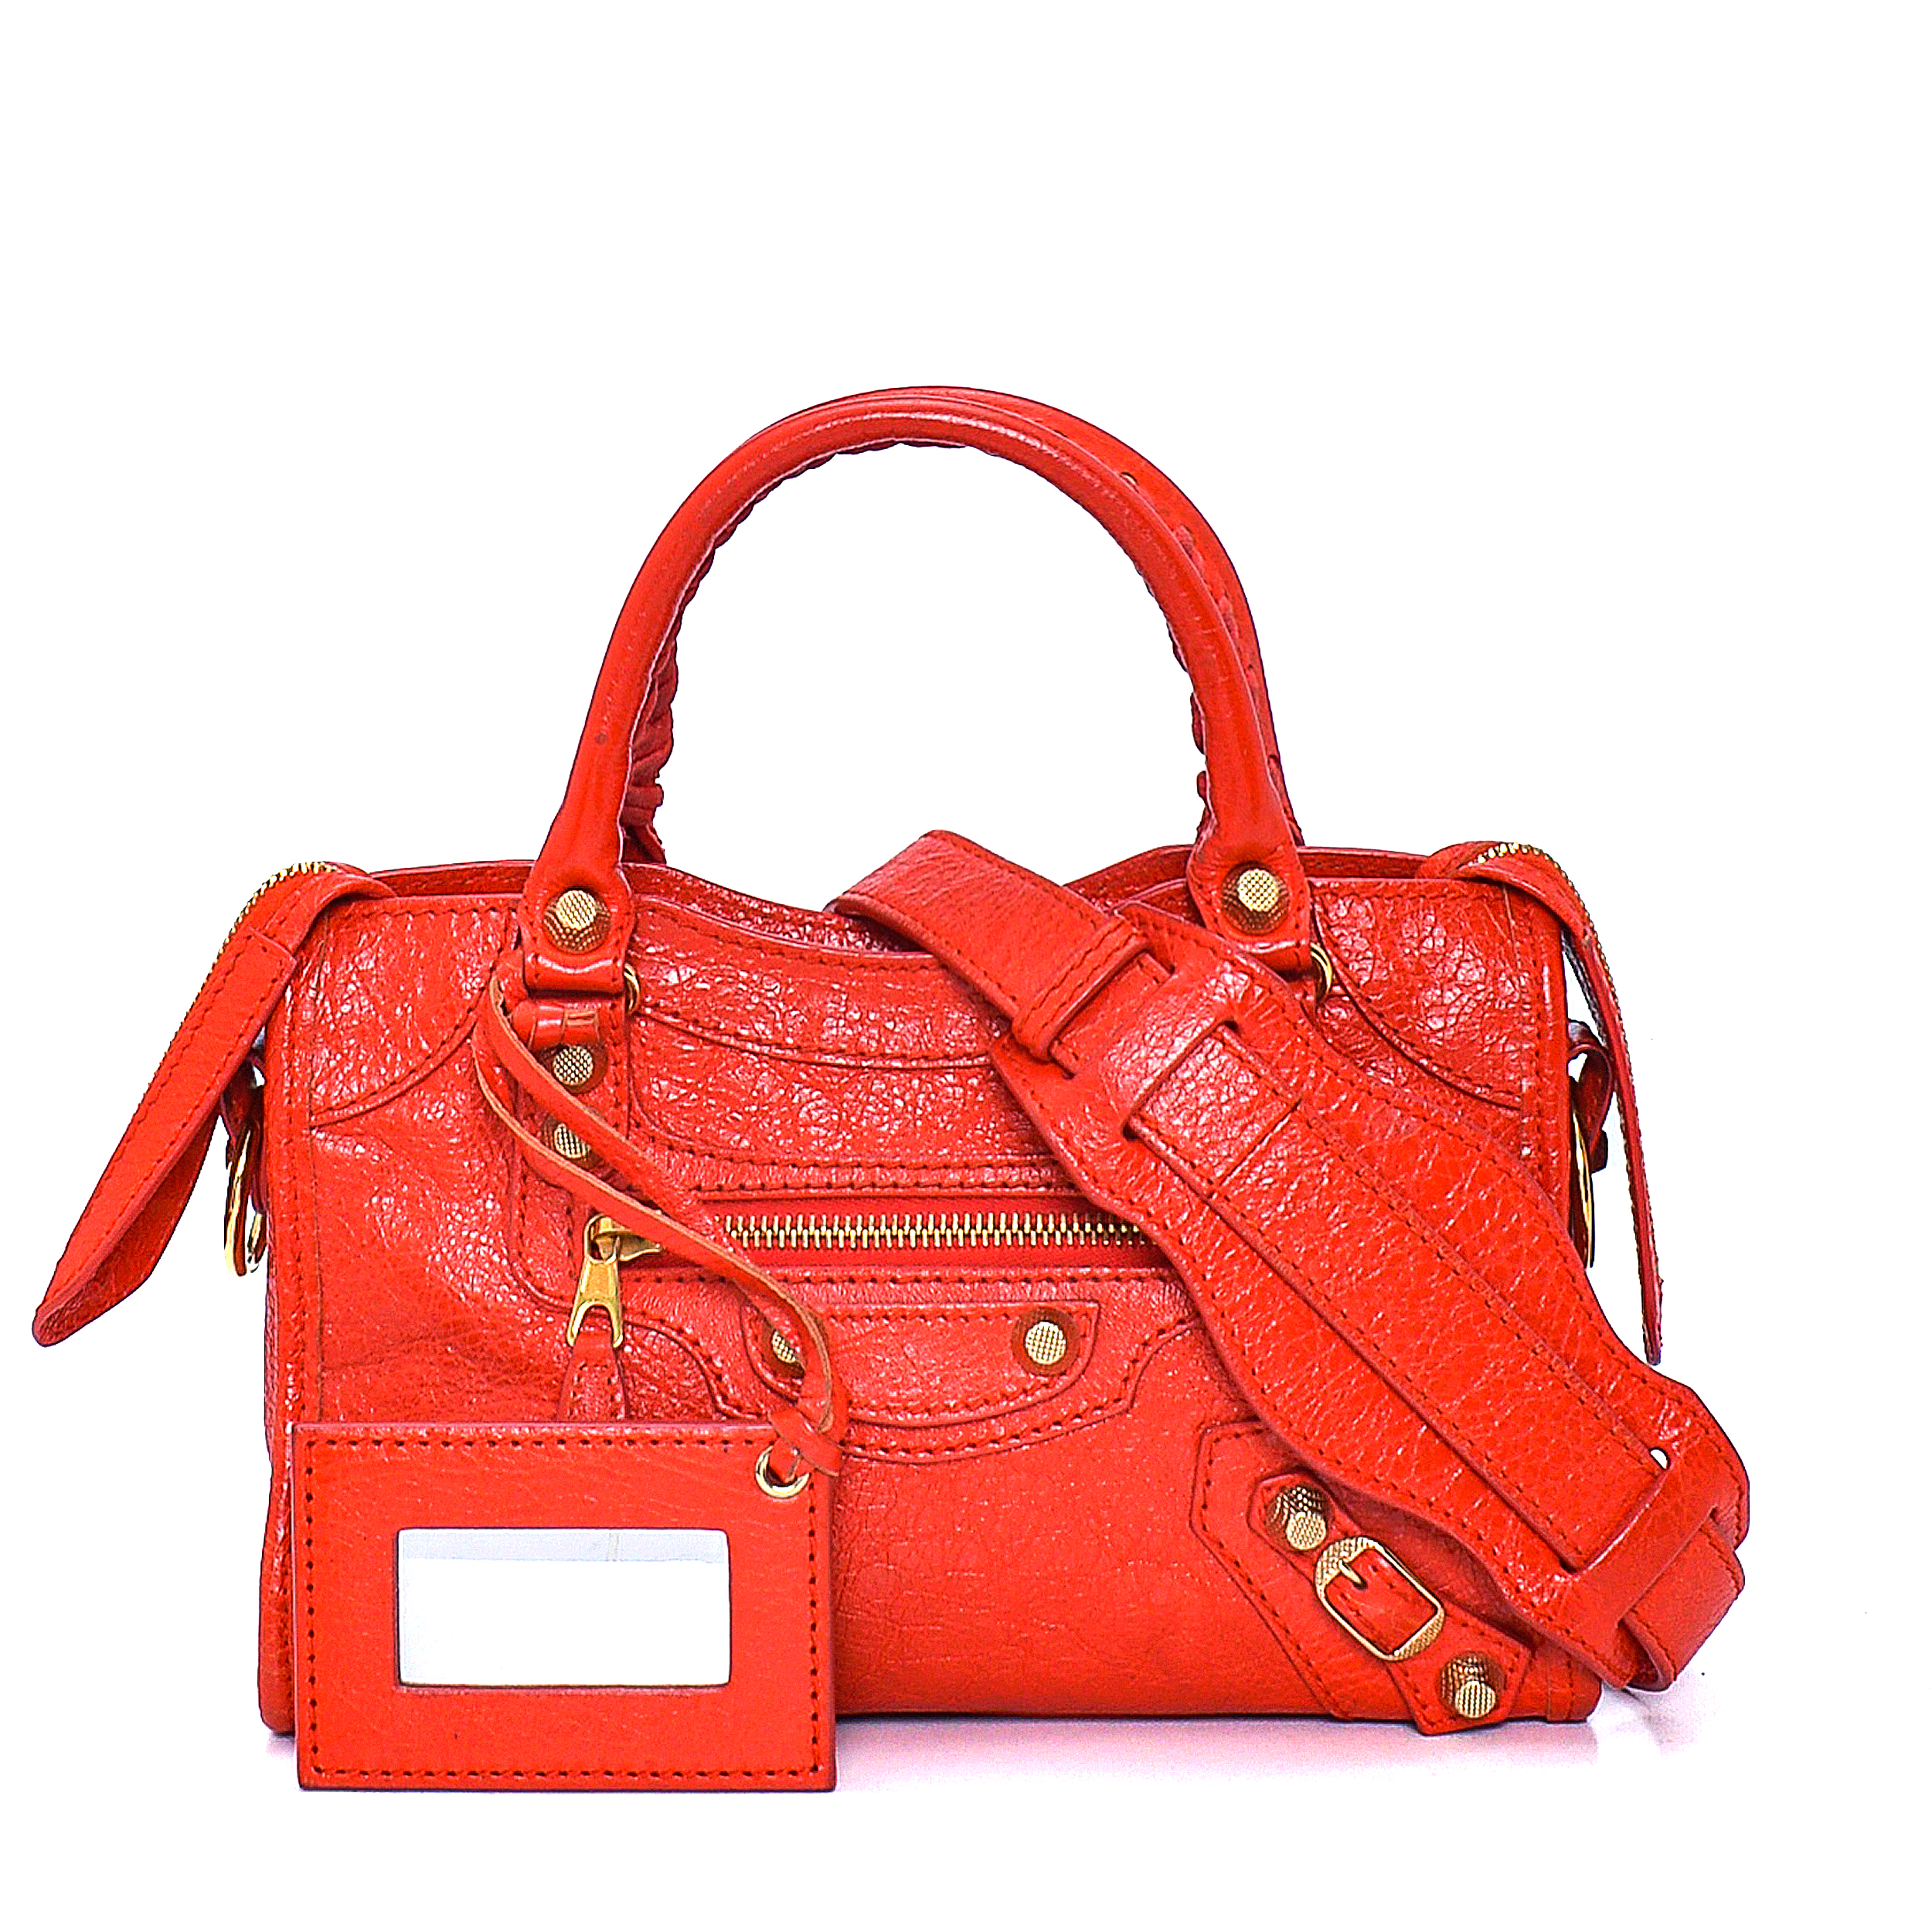 Balenciaga - Red Calfskin Leather Motorcyle Le City Mini Bag